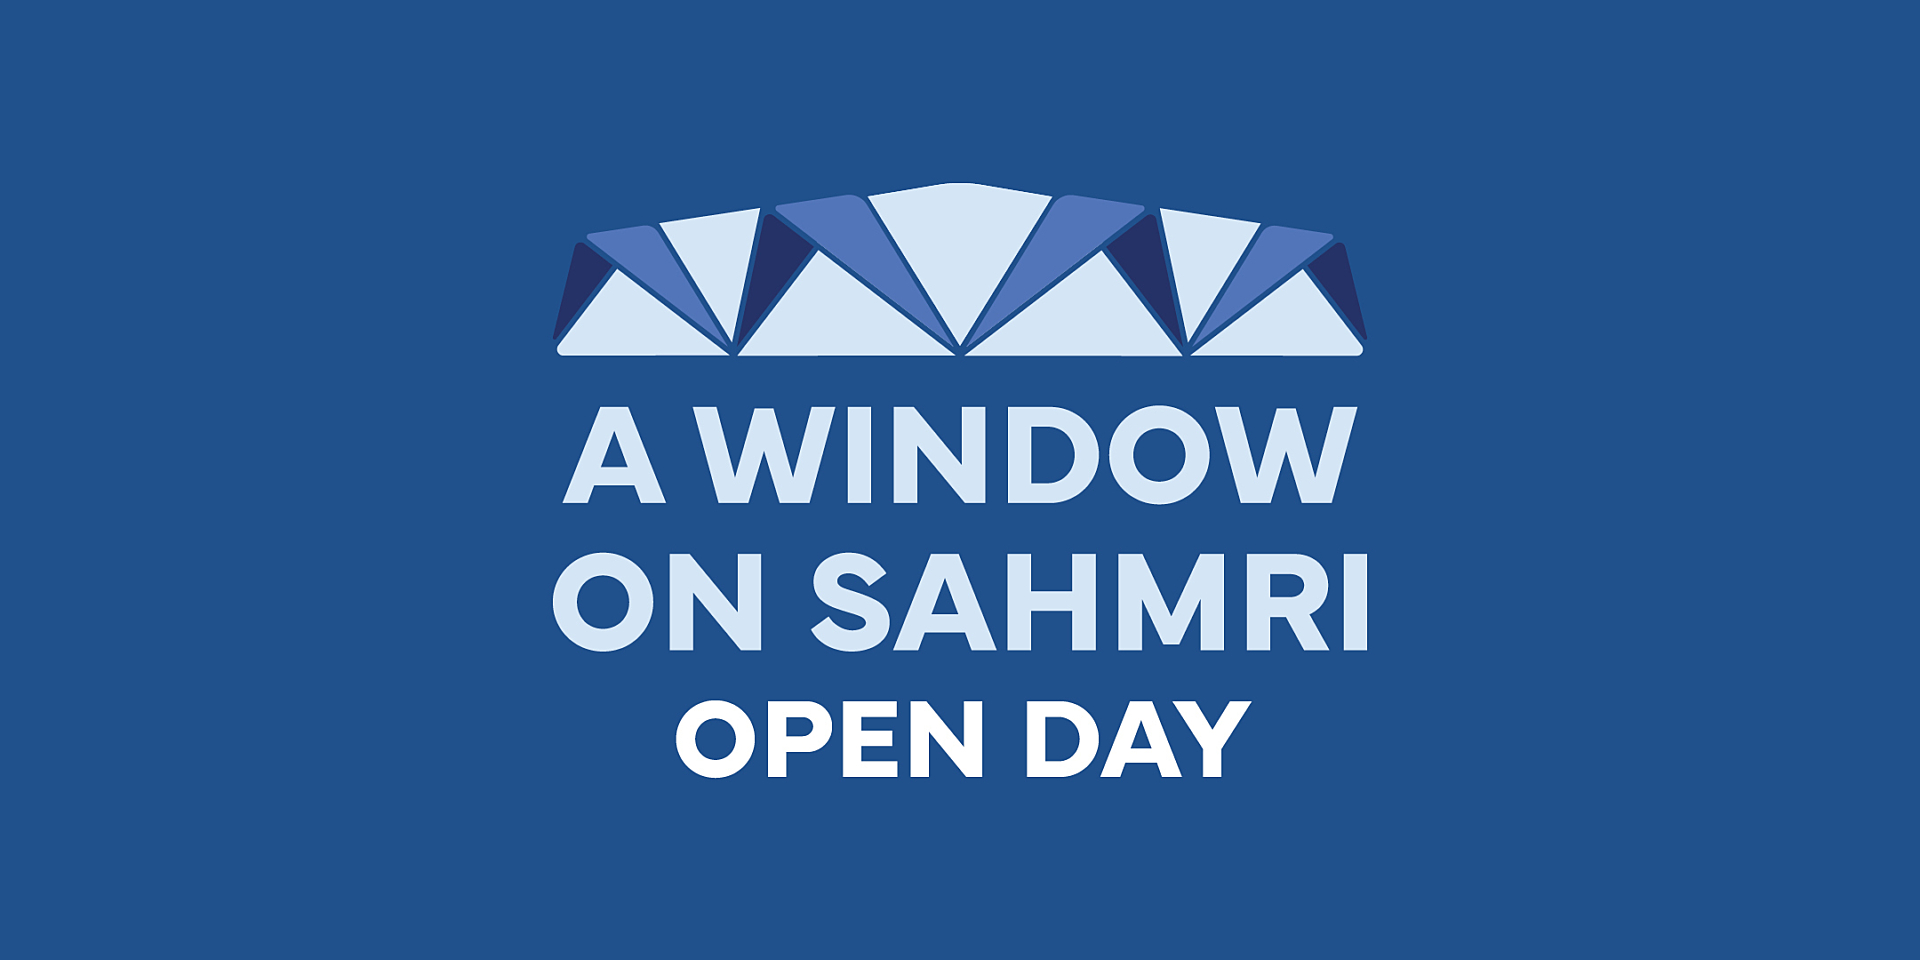 A Window on SAHMRI Open Day